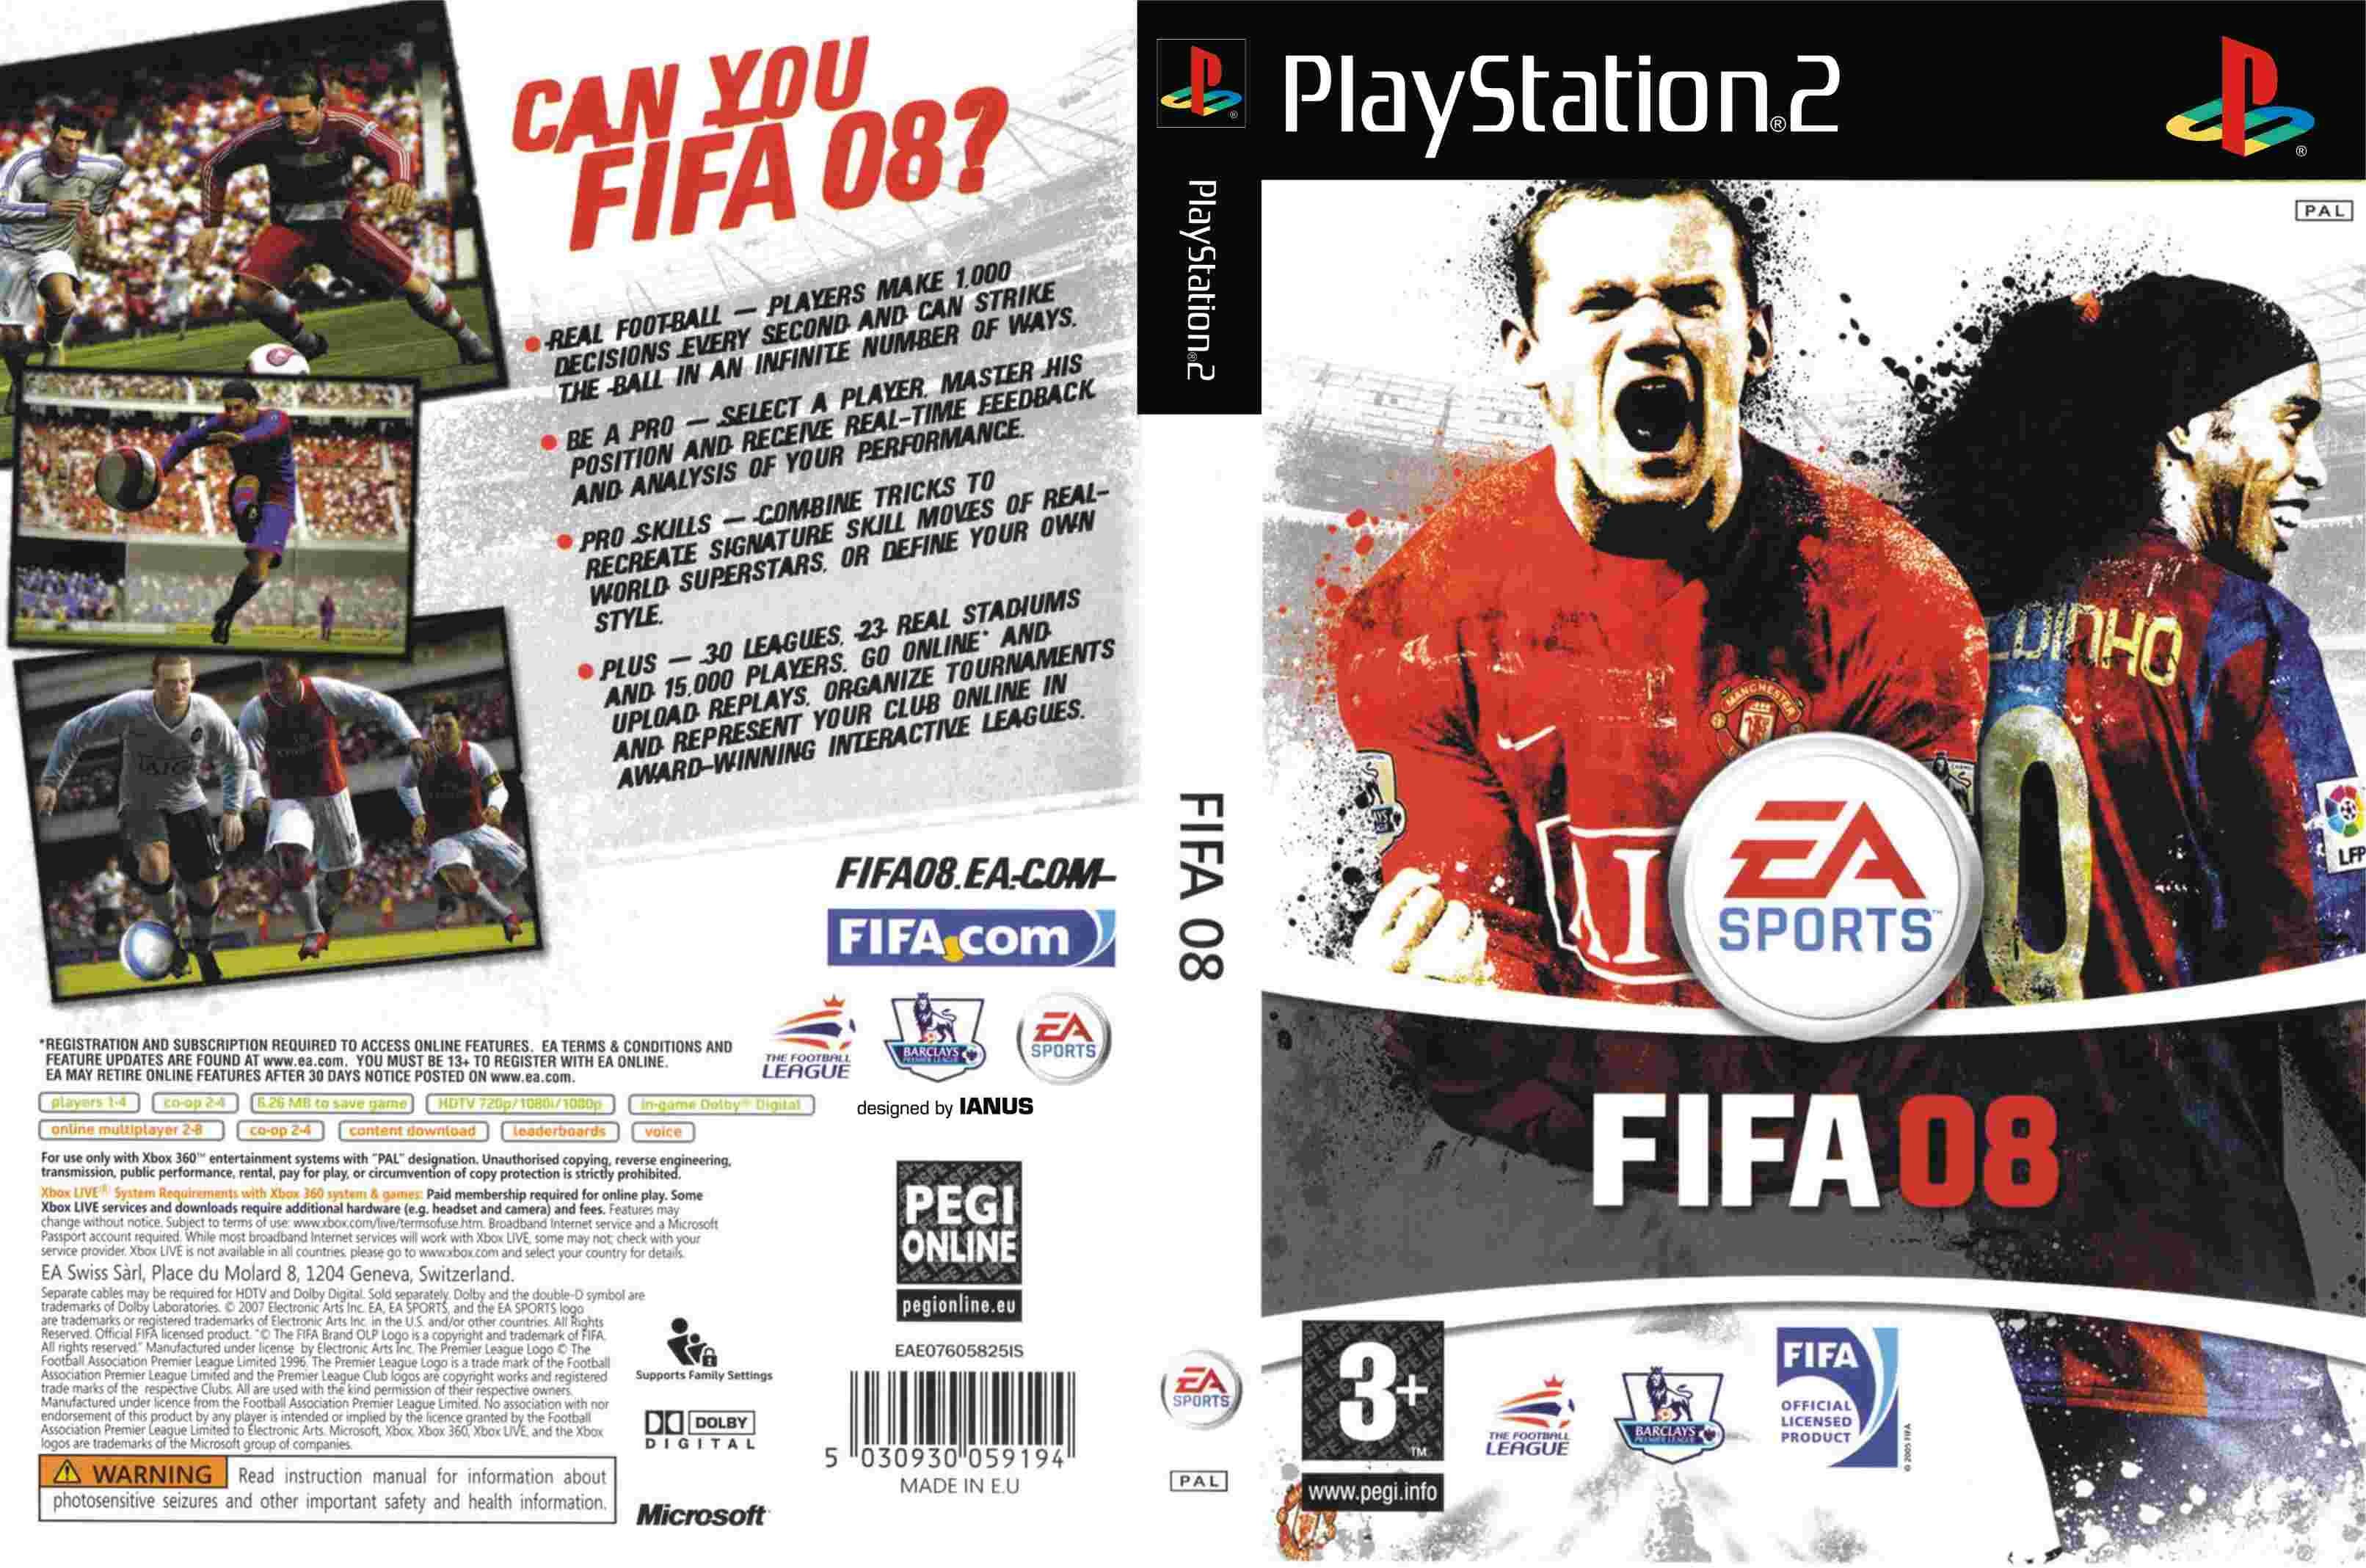 Фифа пс 2. FIFA 08 ps2. FIFA 08 диски PC. Диск FIFA 8 PLAYSTATION 2. FIFA 08 ps2 Cover.